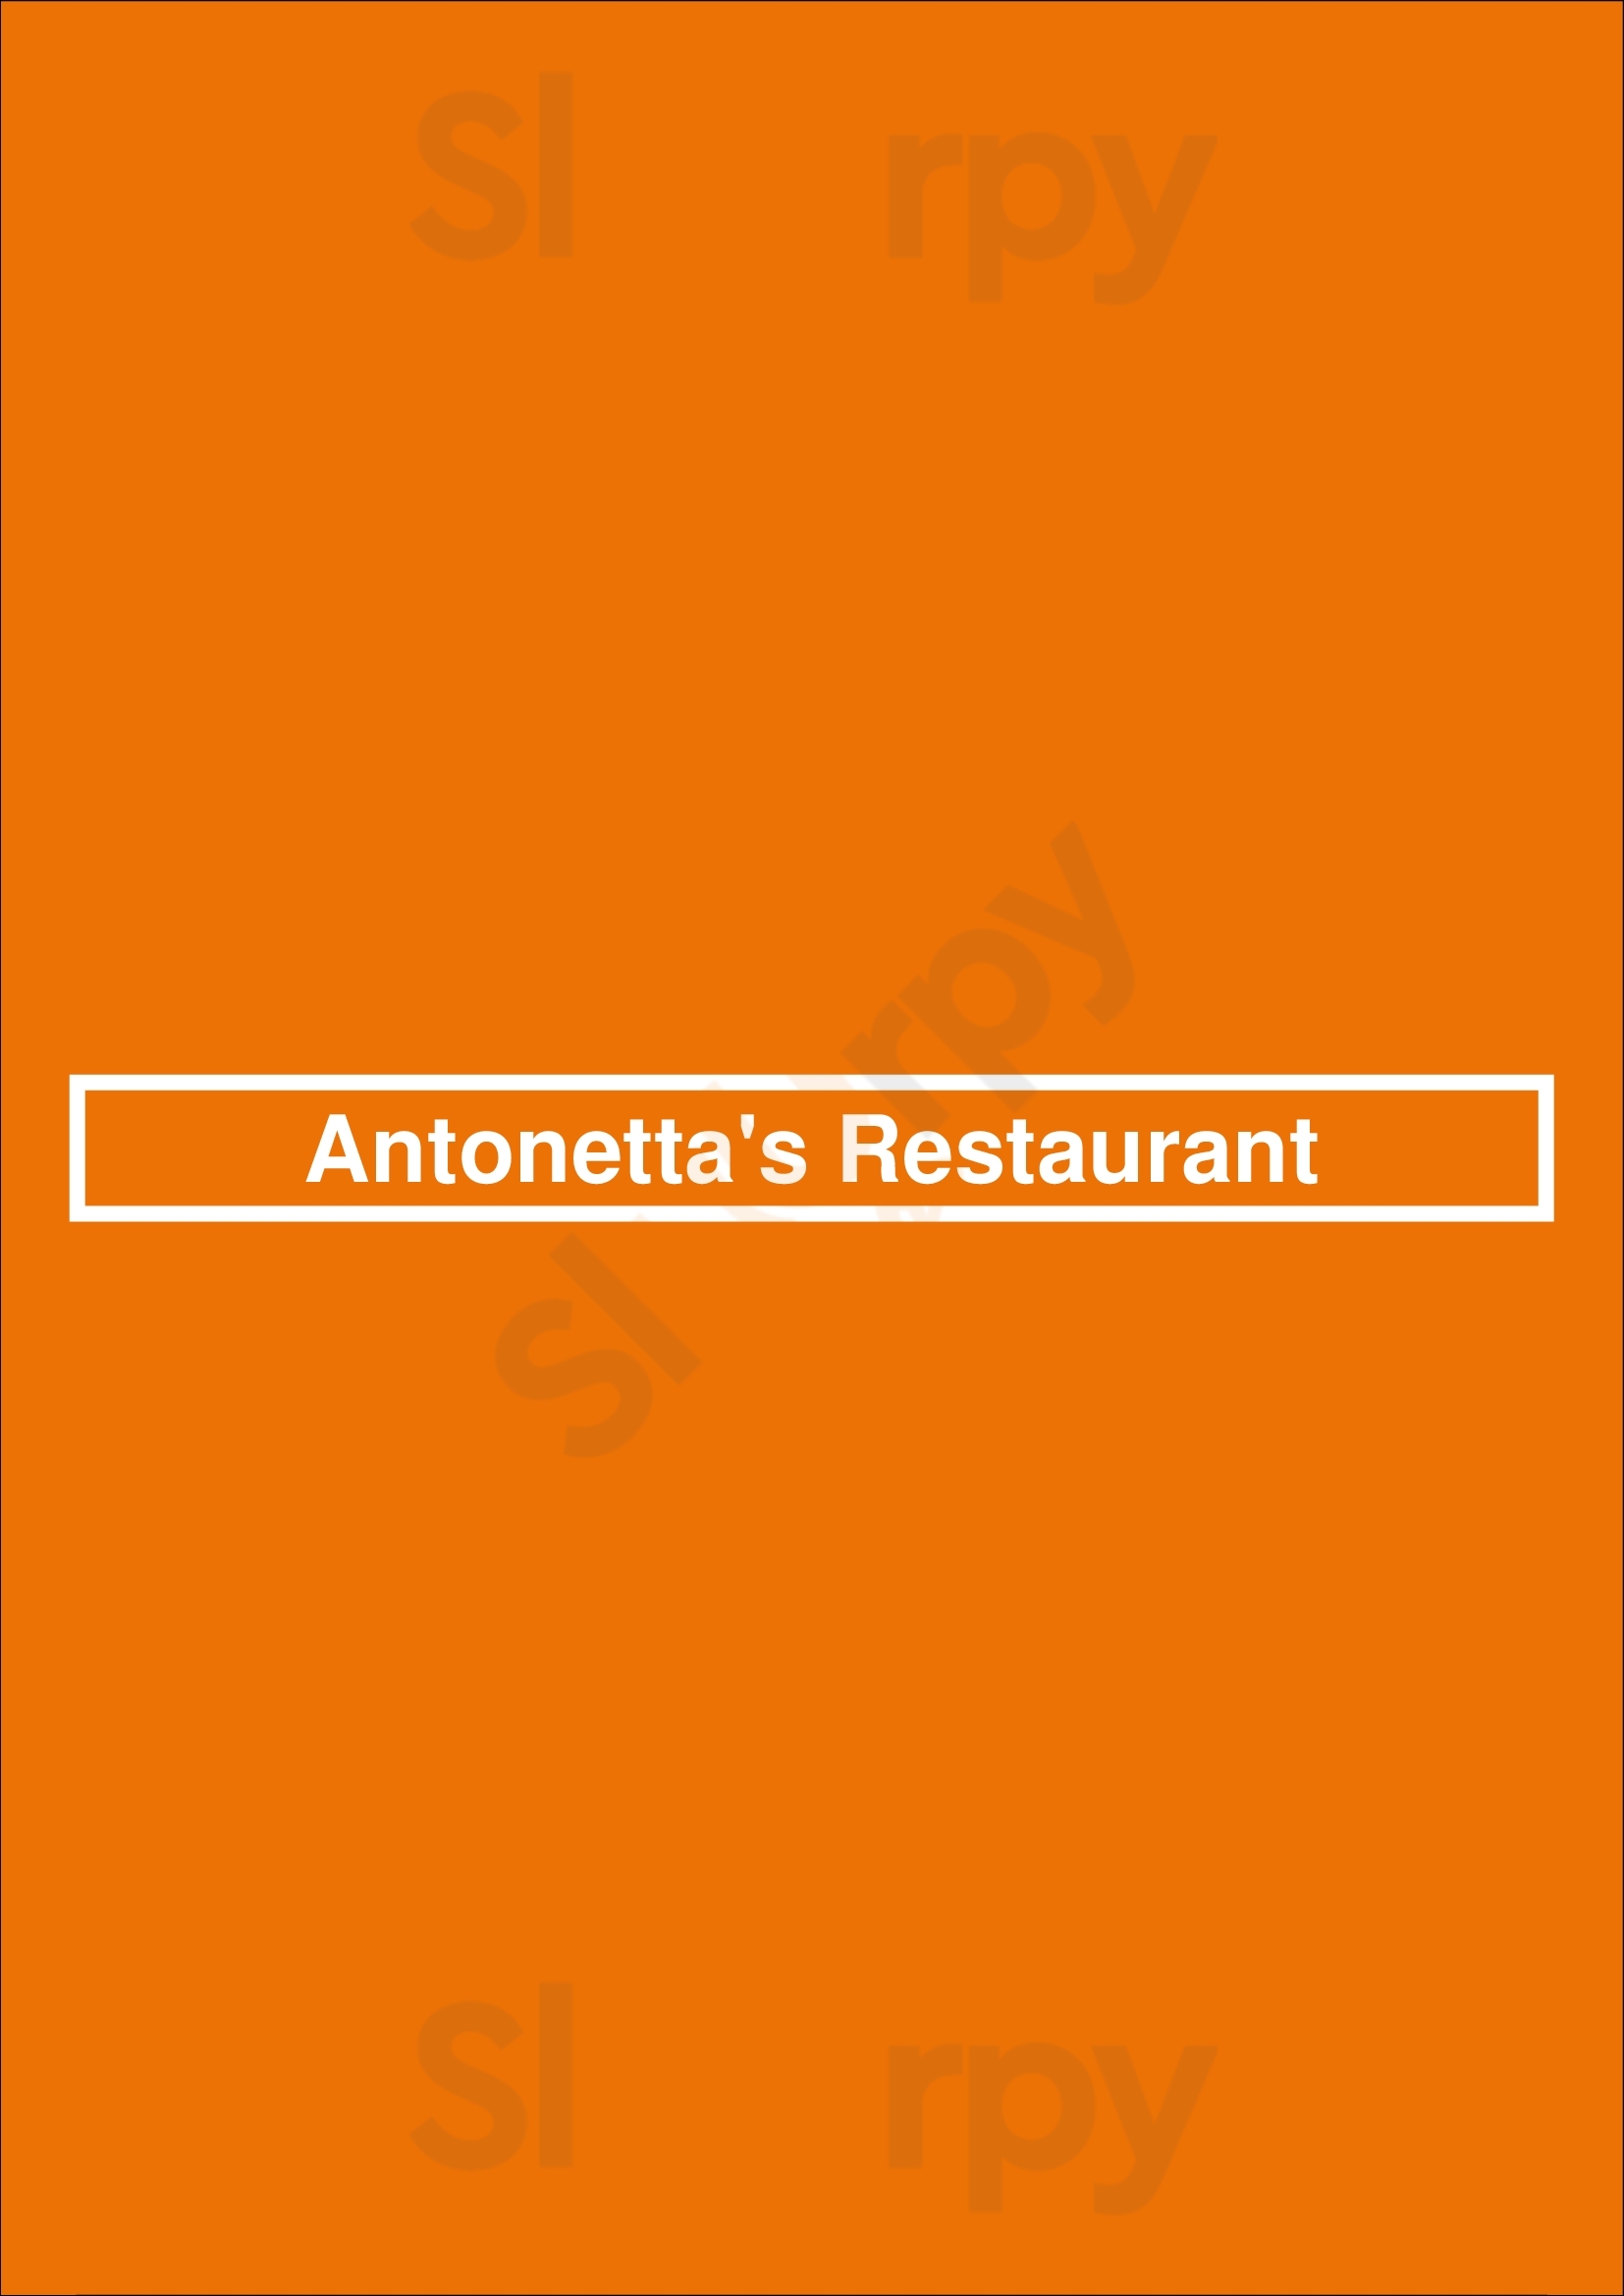 Antonetta's Restaurant Rochester Menu - 1